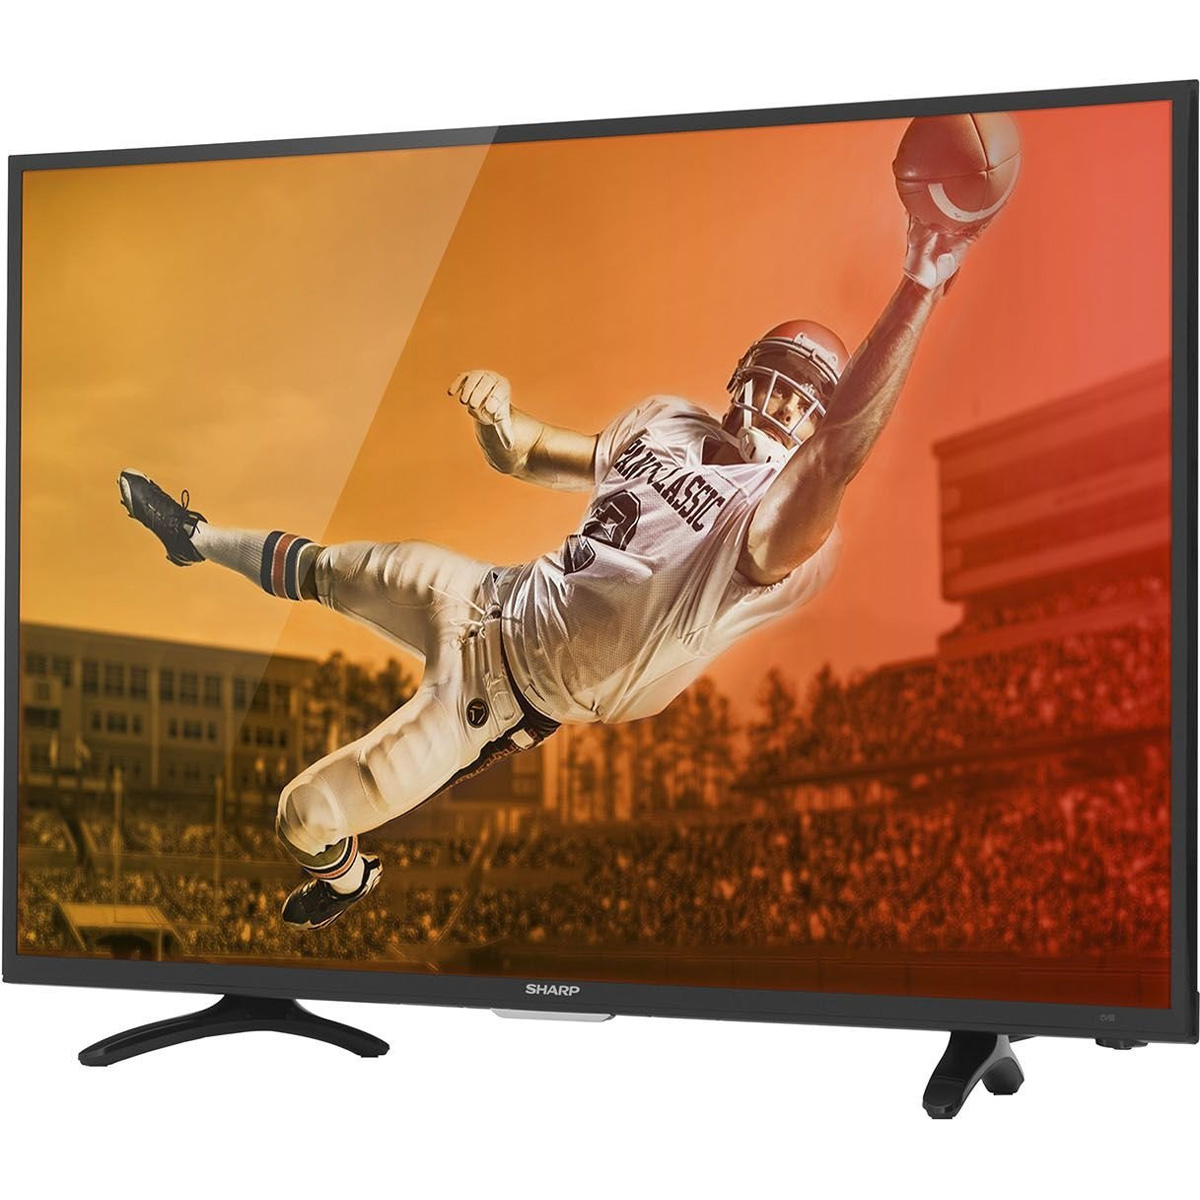 Sharp 50" Class FHD (1080p) LED TV (LC-50N3100U) - image 1 of 5